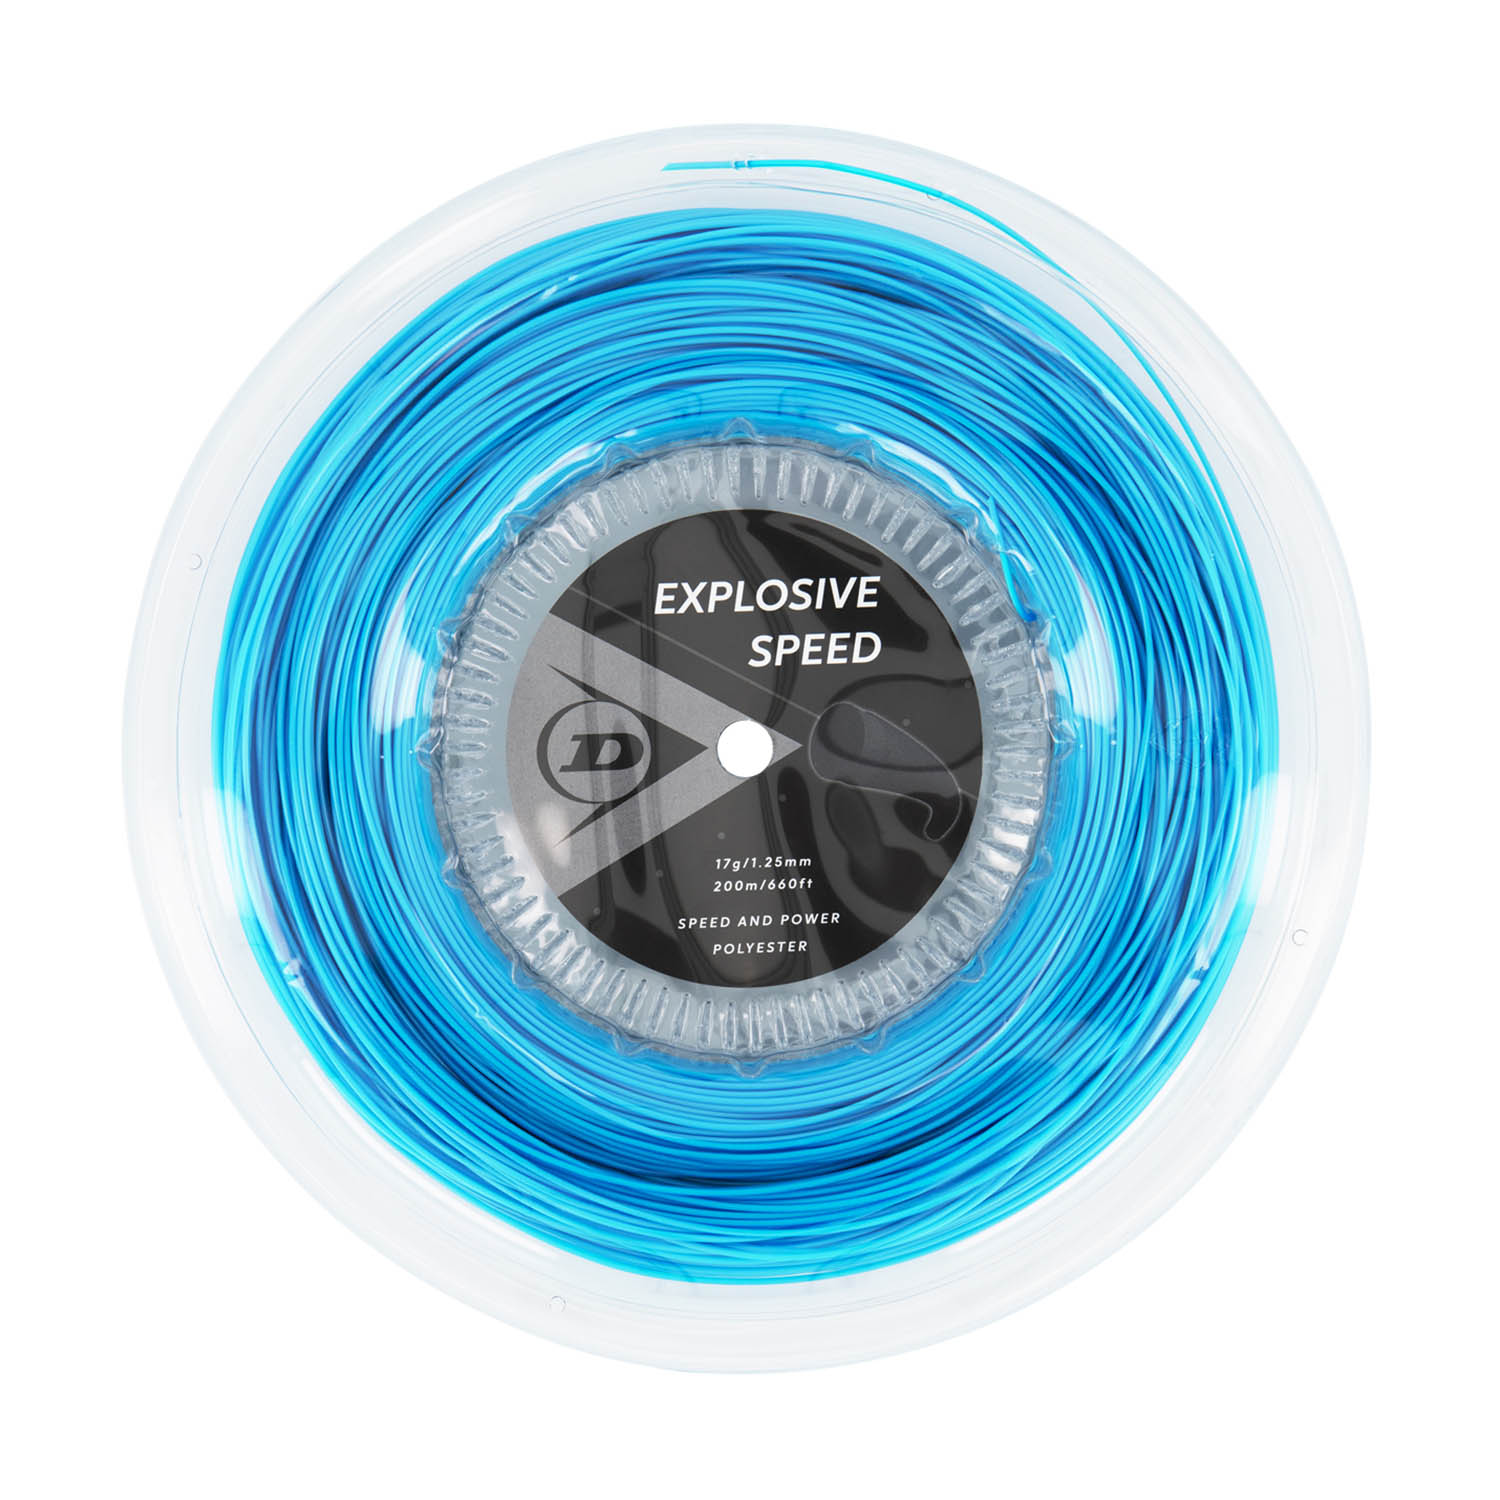 Dunlop Explosive Speed 1.25 200 m String Reel - Blue